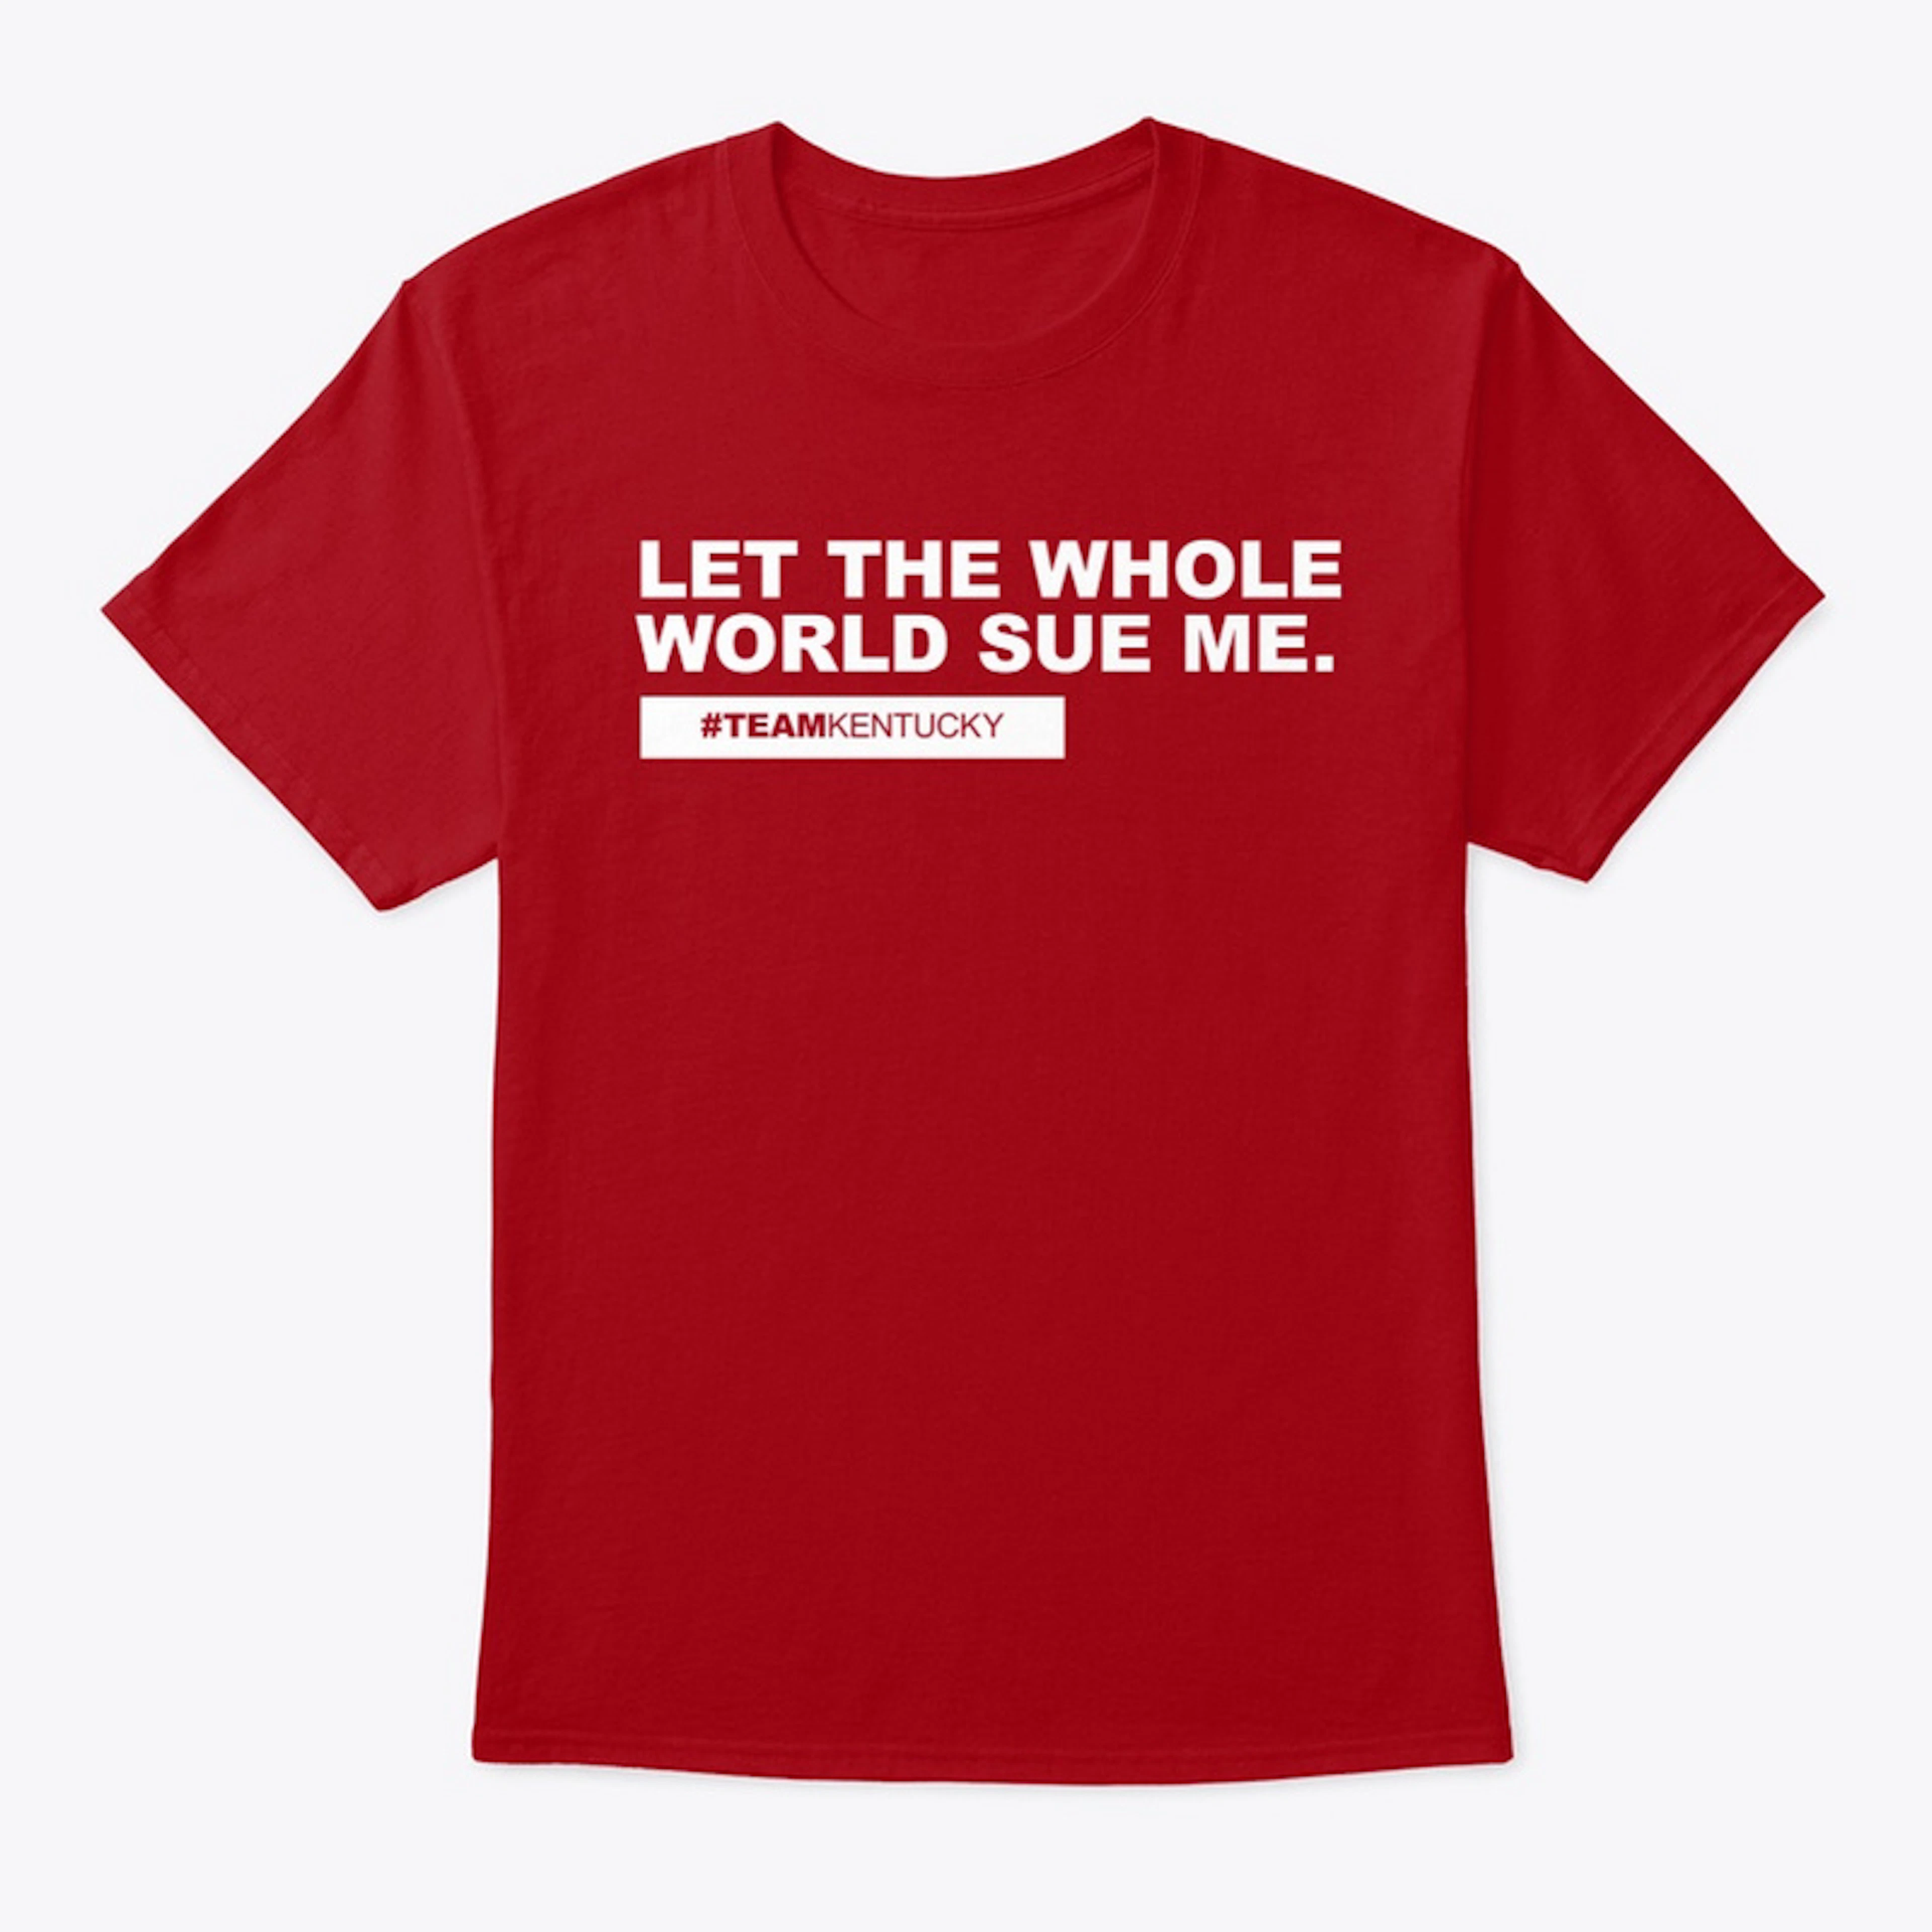 Let The Whole World Sue Me. (White)